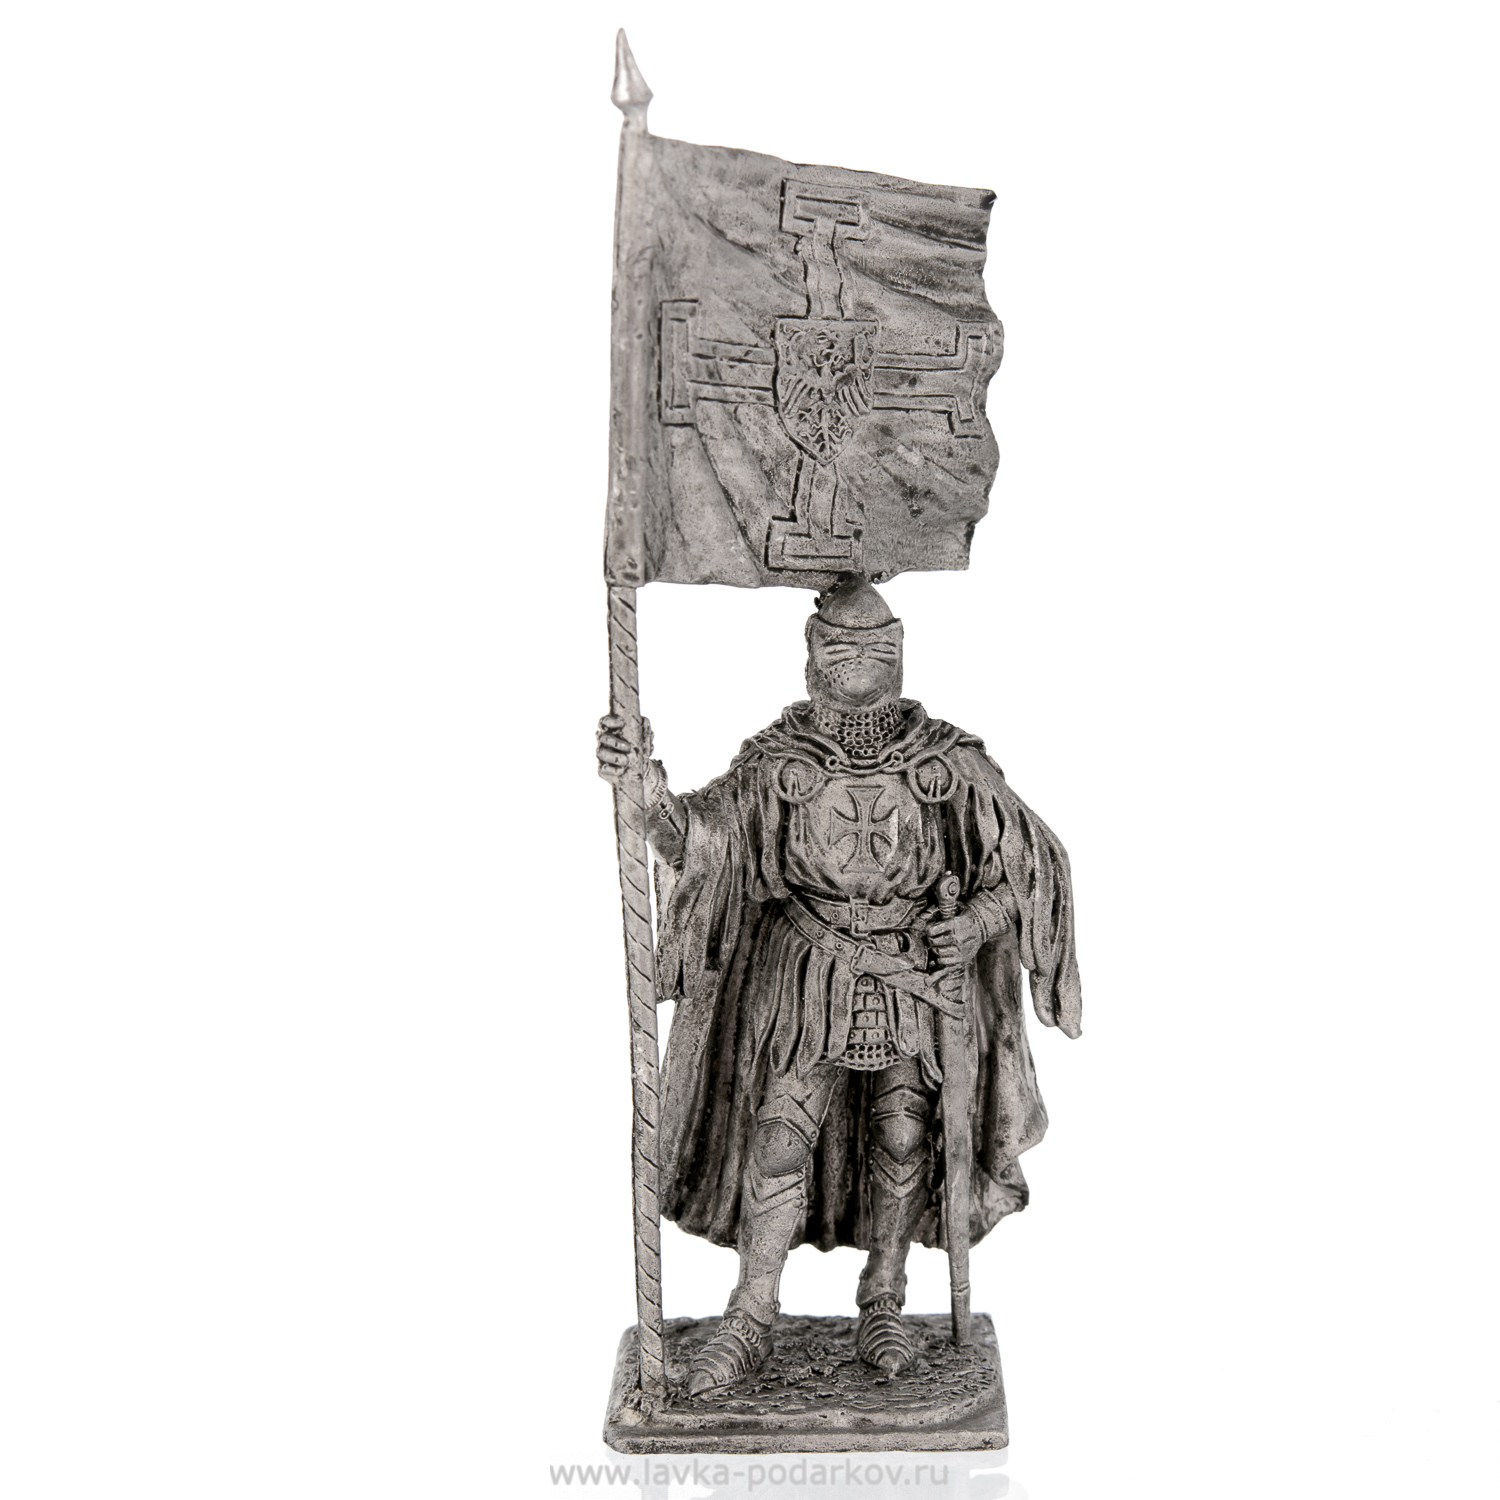 Солдатик Тевтонский рыцарь со знаменем ордена, 1400 год